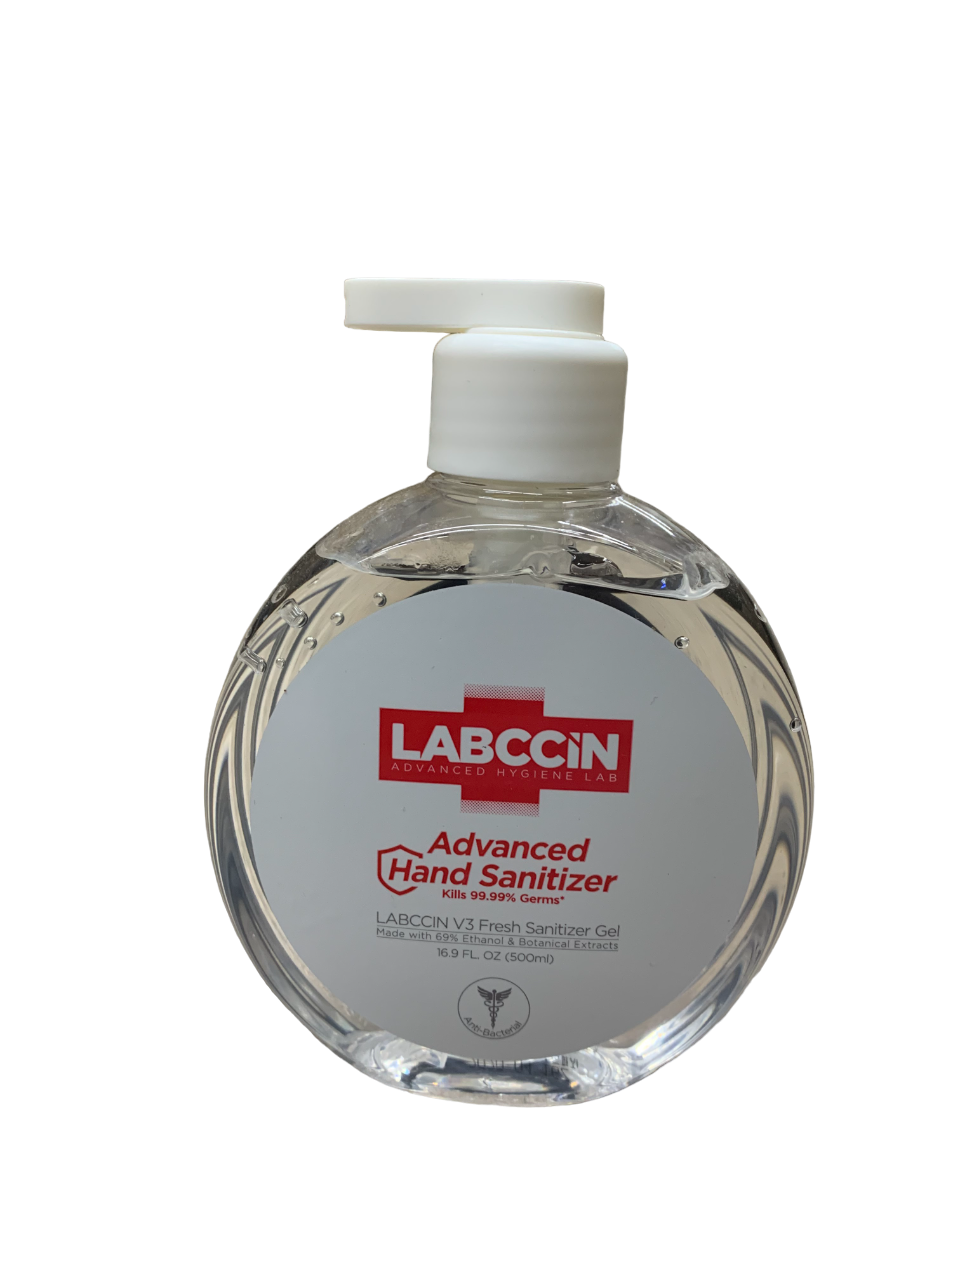 Labccin Advanced Hand Sanitizer